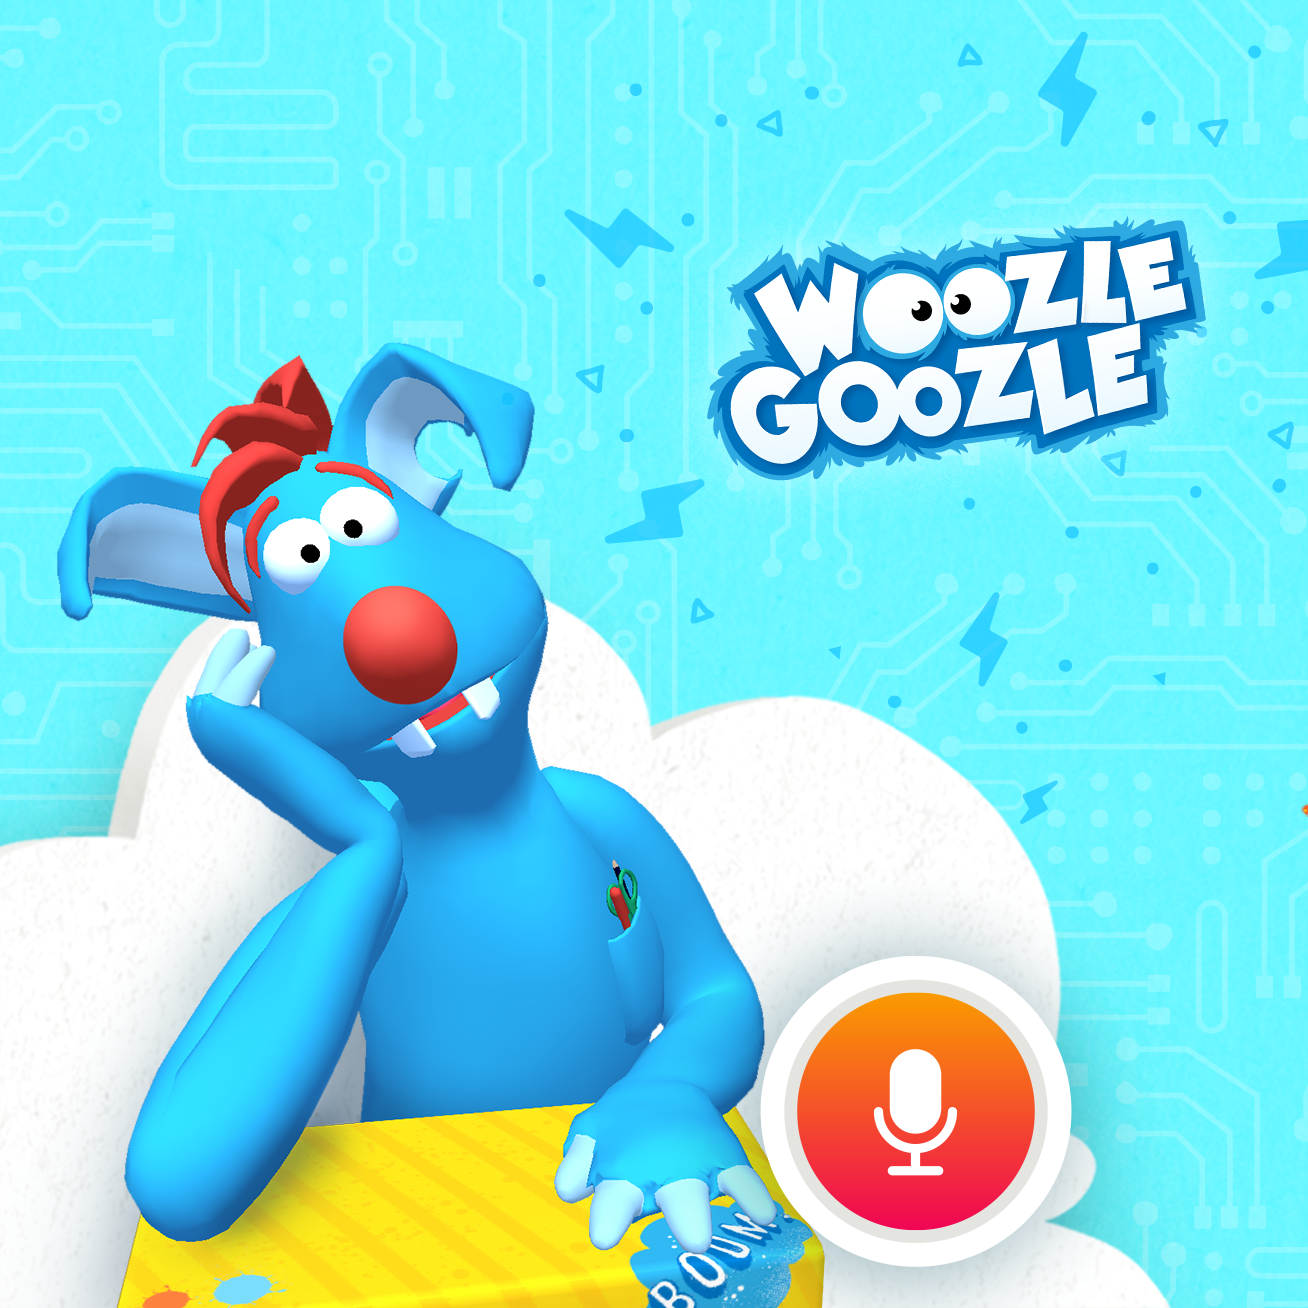 Woozle Goozle App With Voice Control